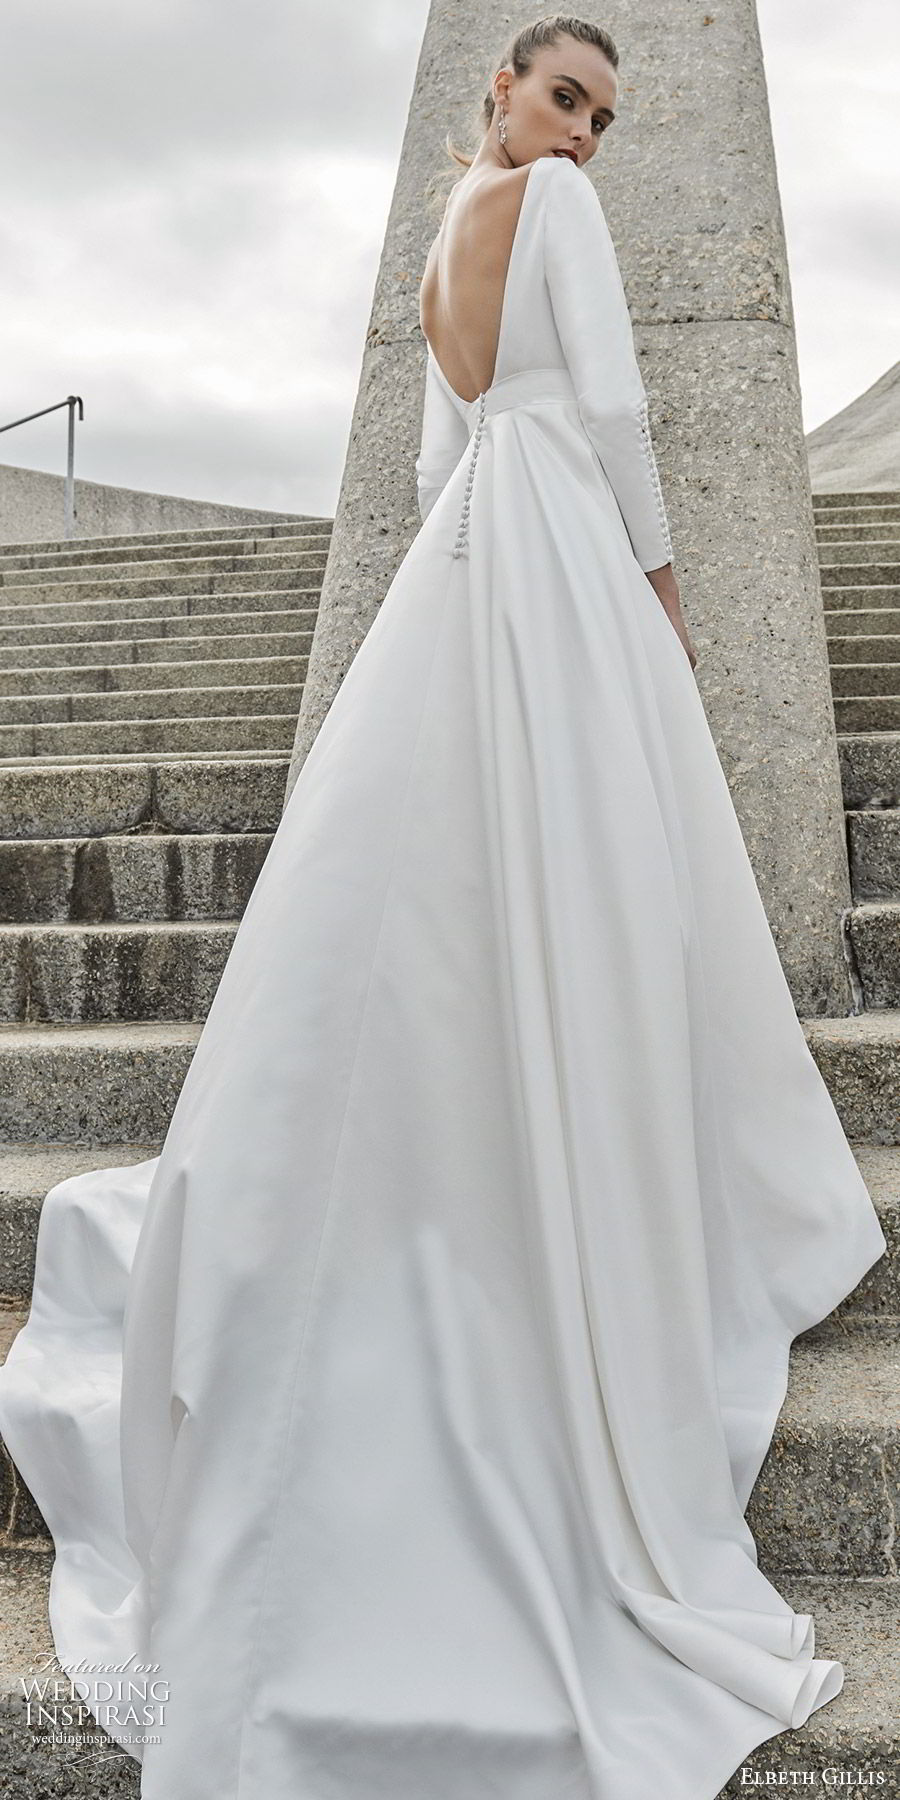 elbeth gillis 2020 bridal long sleeves bataeu neckline minimally embellished a line ball gown wedding dress (9) clean minimal chic princess modern cathedral train bv